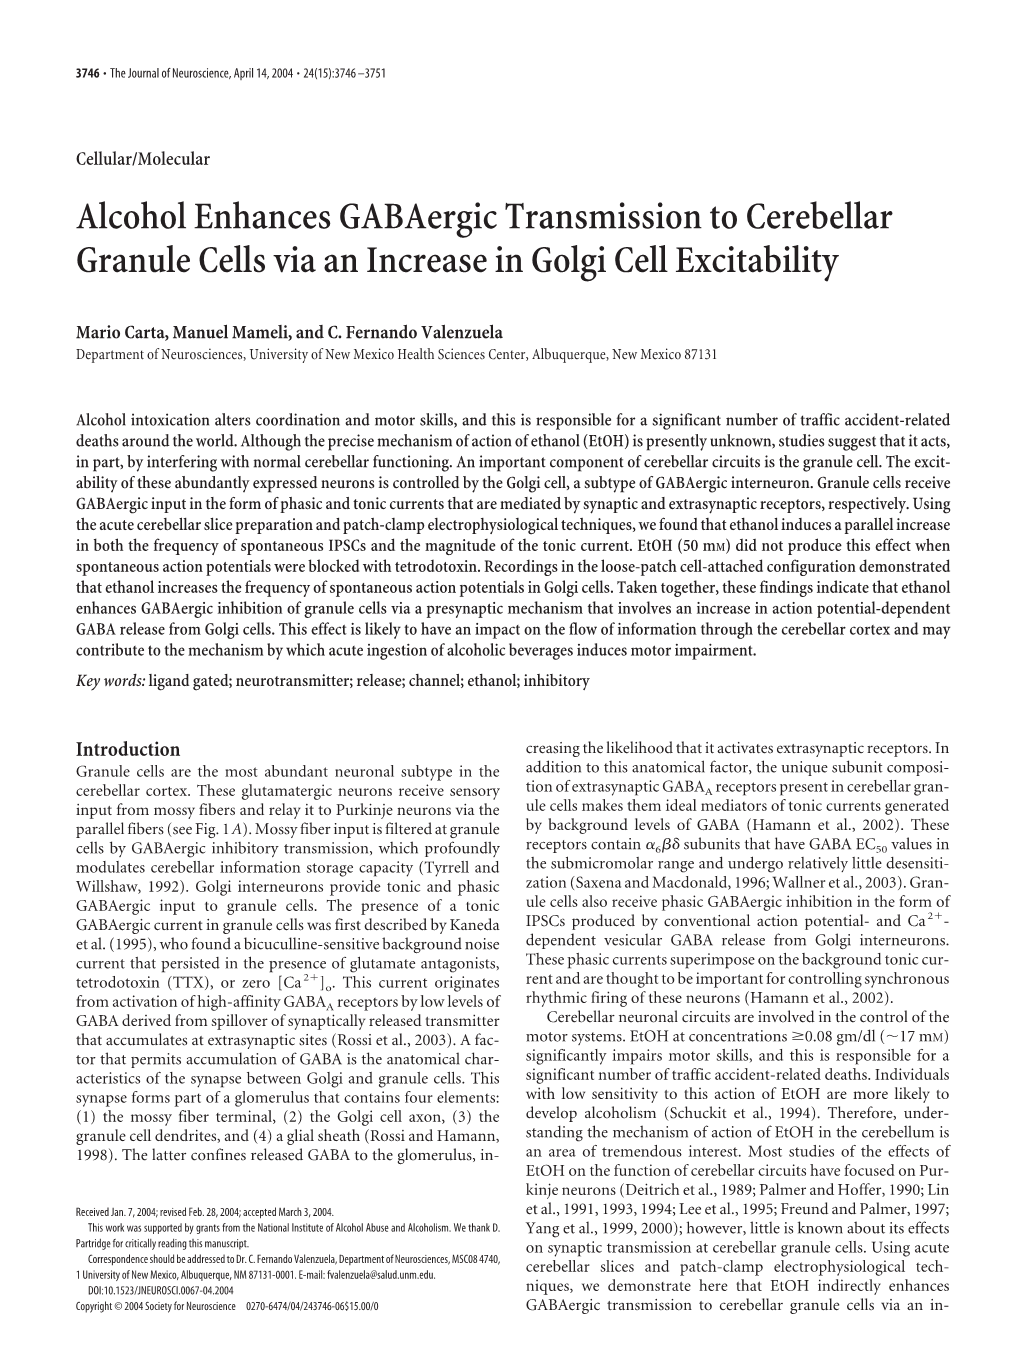 Alcohol Enhances Gabaergic Transmission to Cerebellar Granule Cells Via an Increase in Golgi Cell Excitability